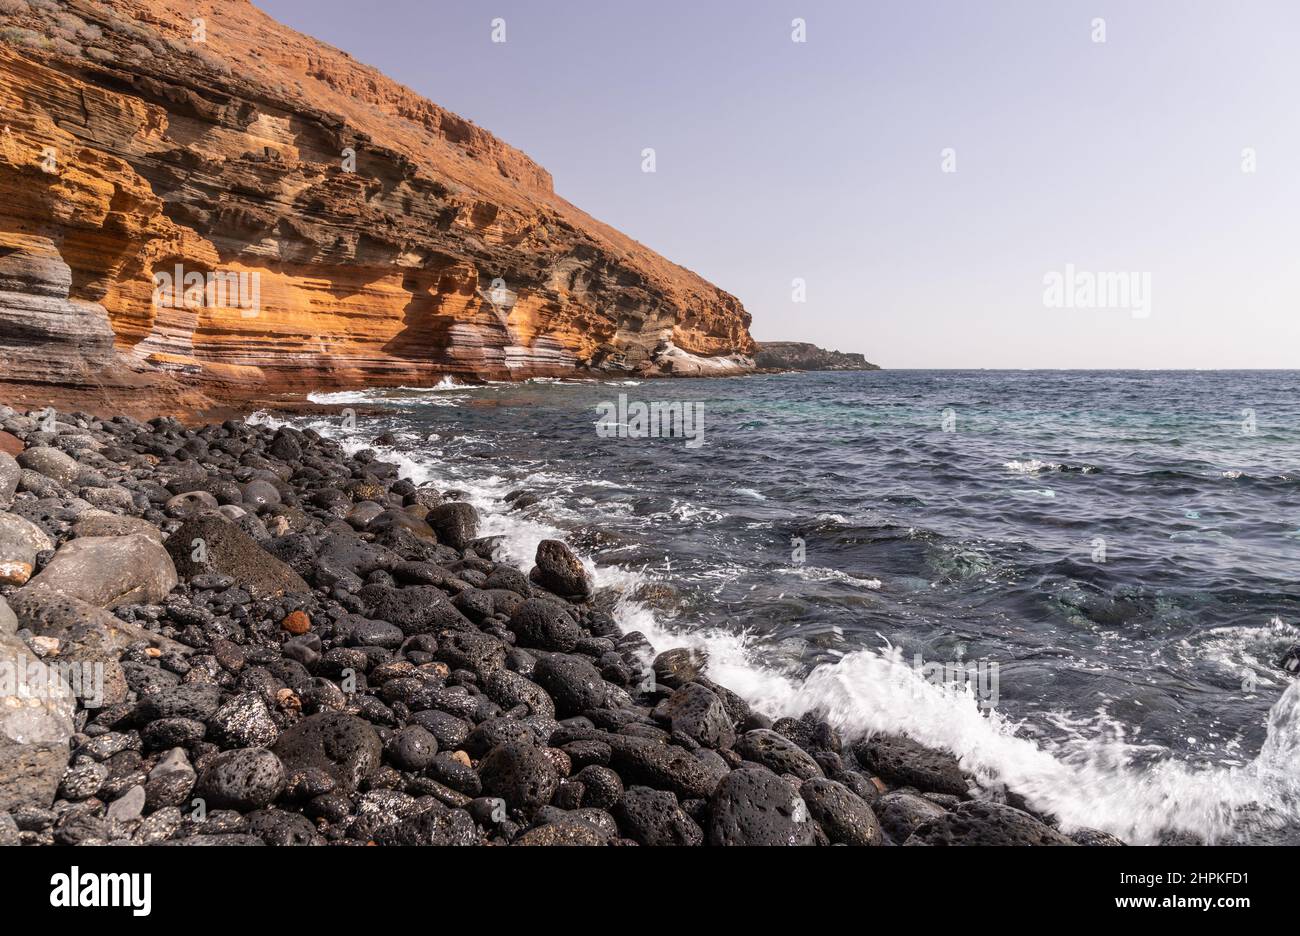 Eroded volcanic sea cliffs at Costa del Silencio, Tenerife, Canary Islands Stock Photo